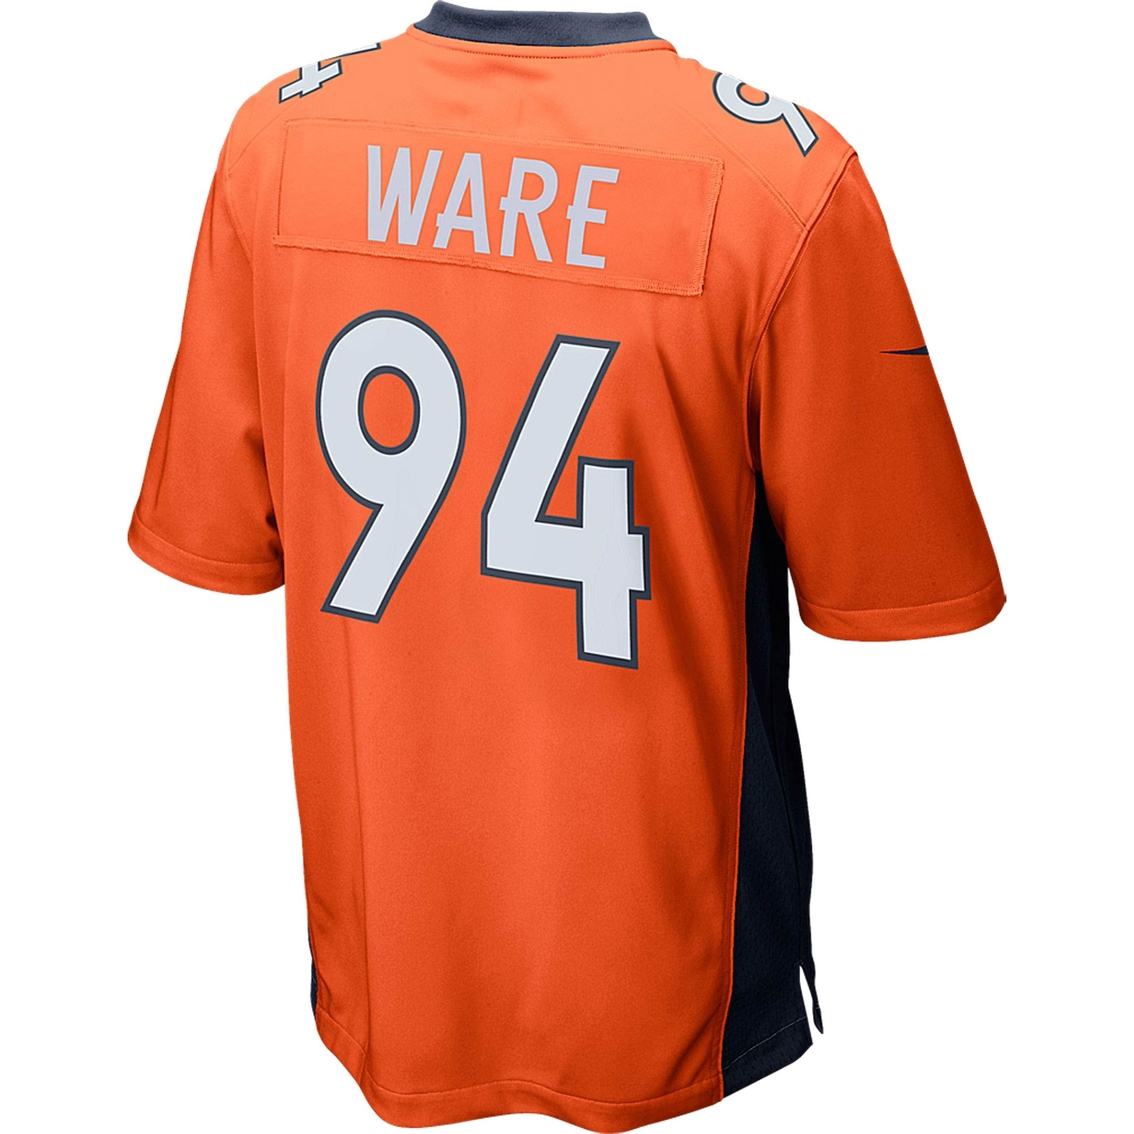 Nike NFL Denver Broncos Men's Demarcus Ware Game Jersey - Image 2 of 2